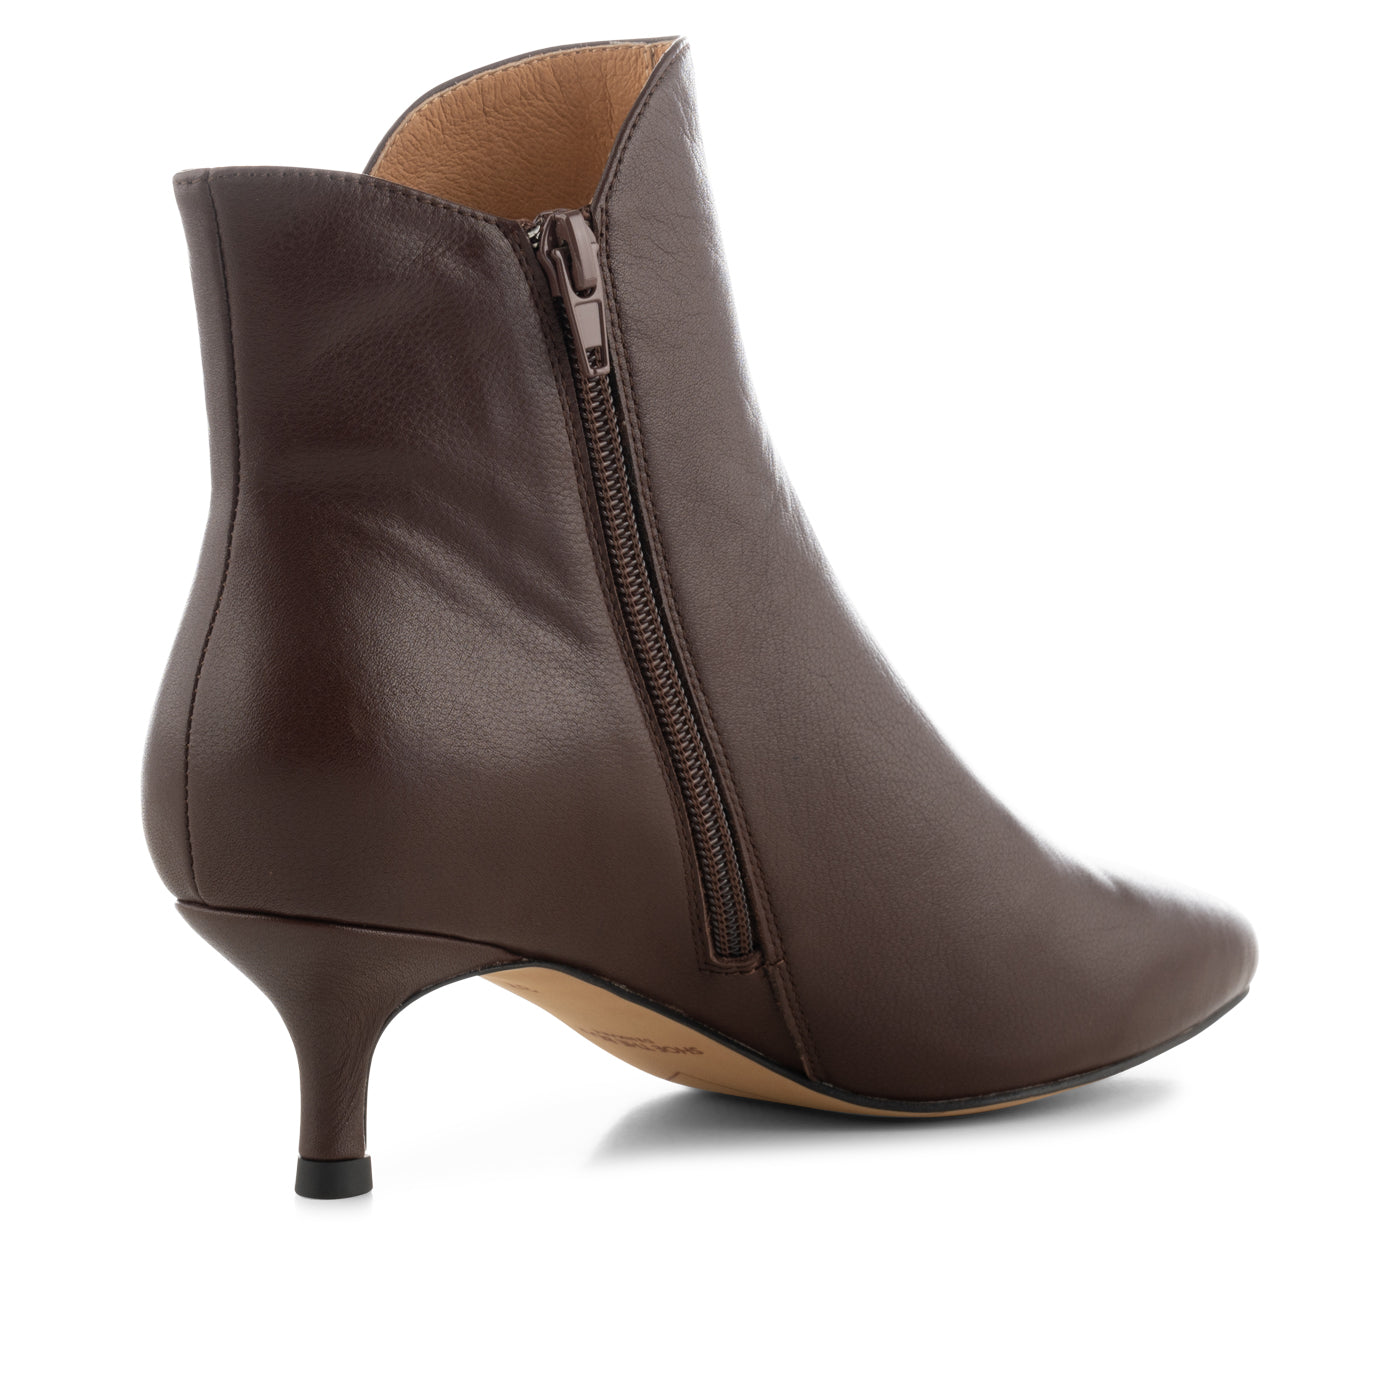 SHOE THE BEAR WOMENS Saga boot leather Heels 130 BROWN